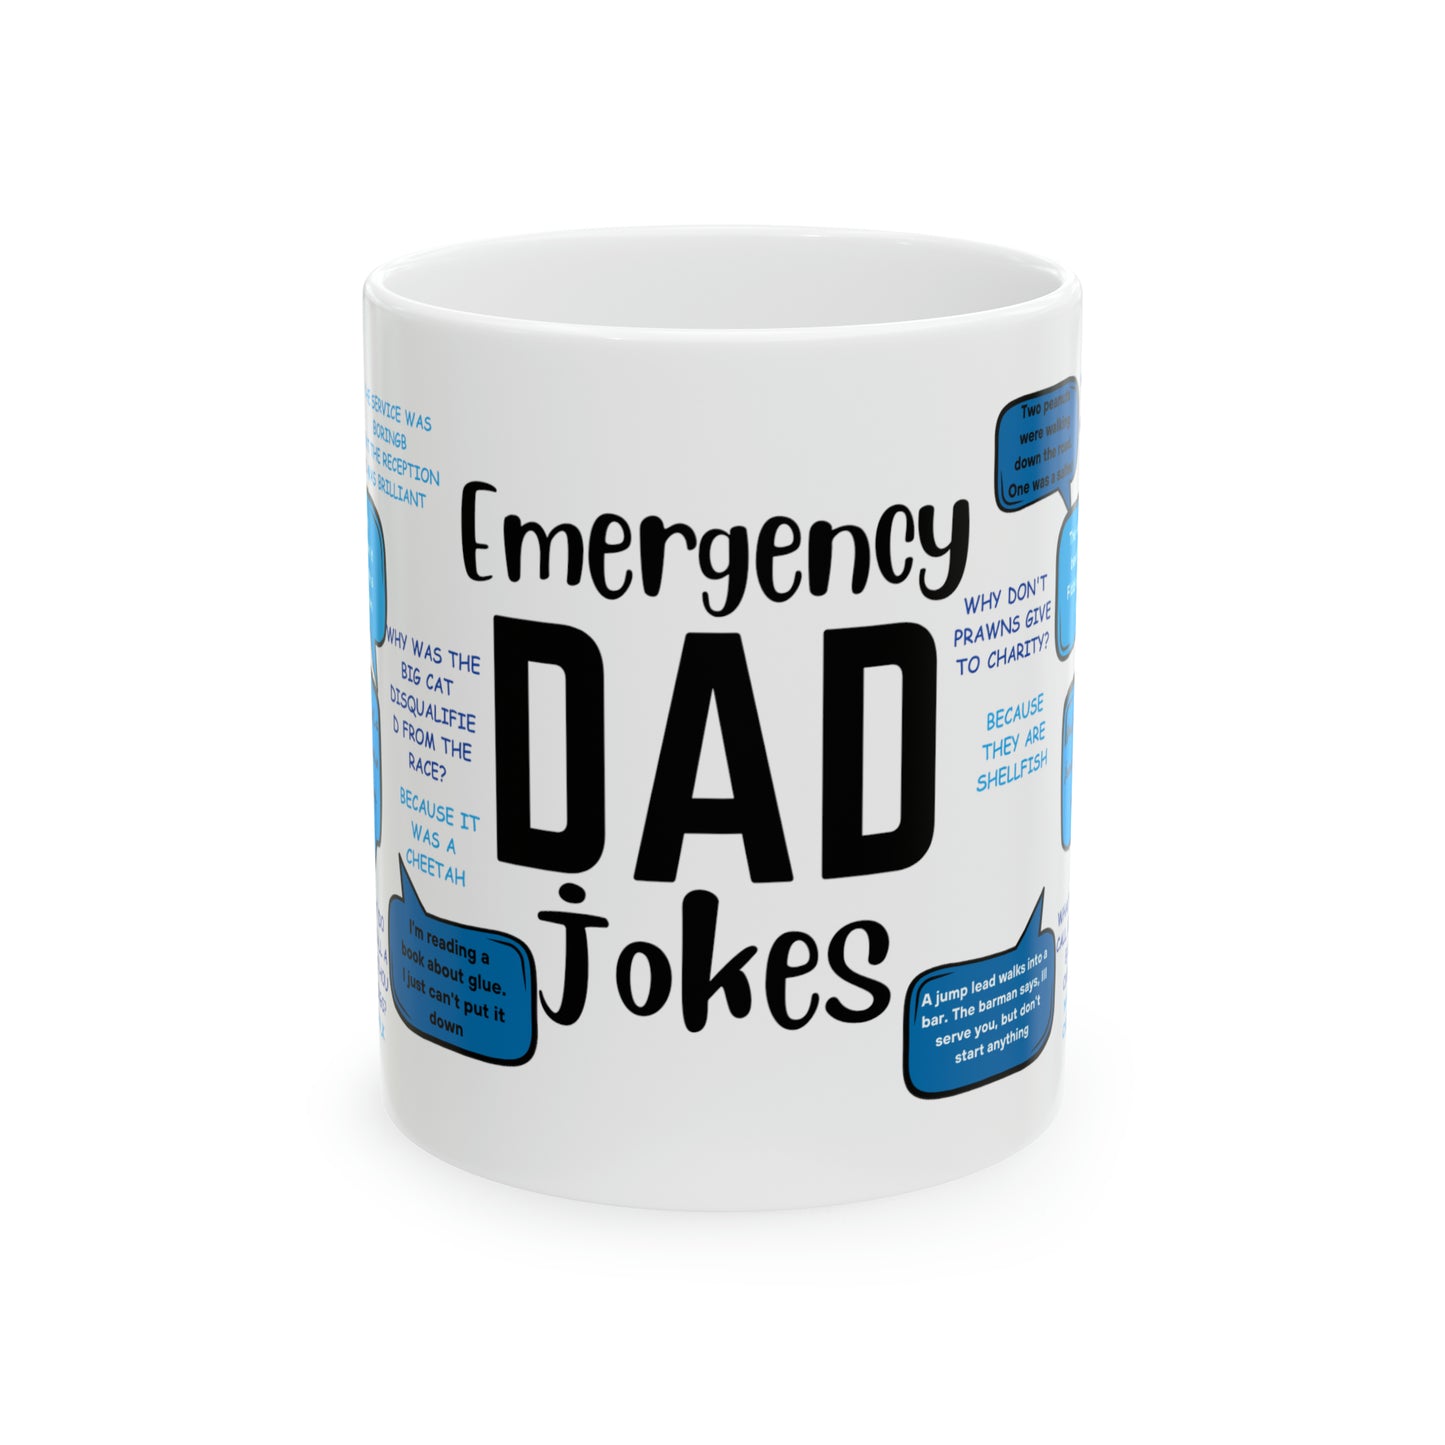 Emergency Dog Jokes Custom Mug, Father's Day Gift